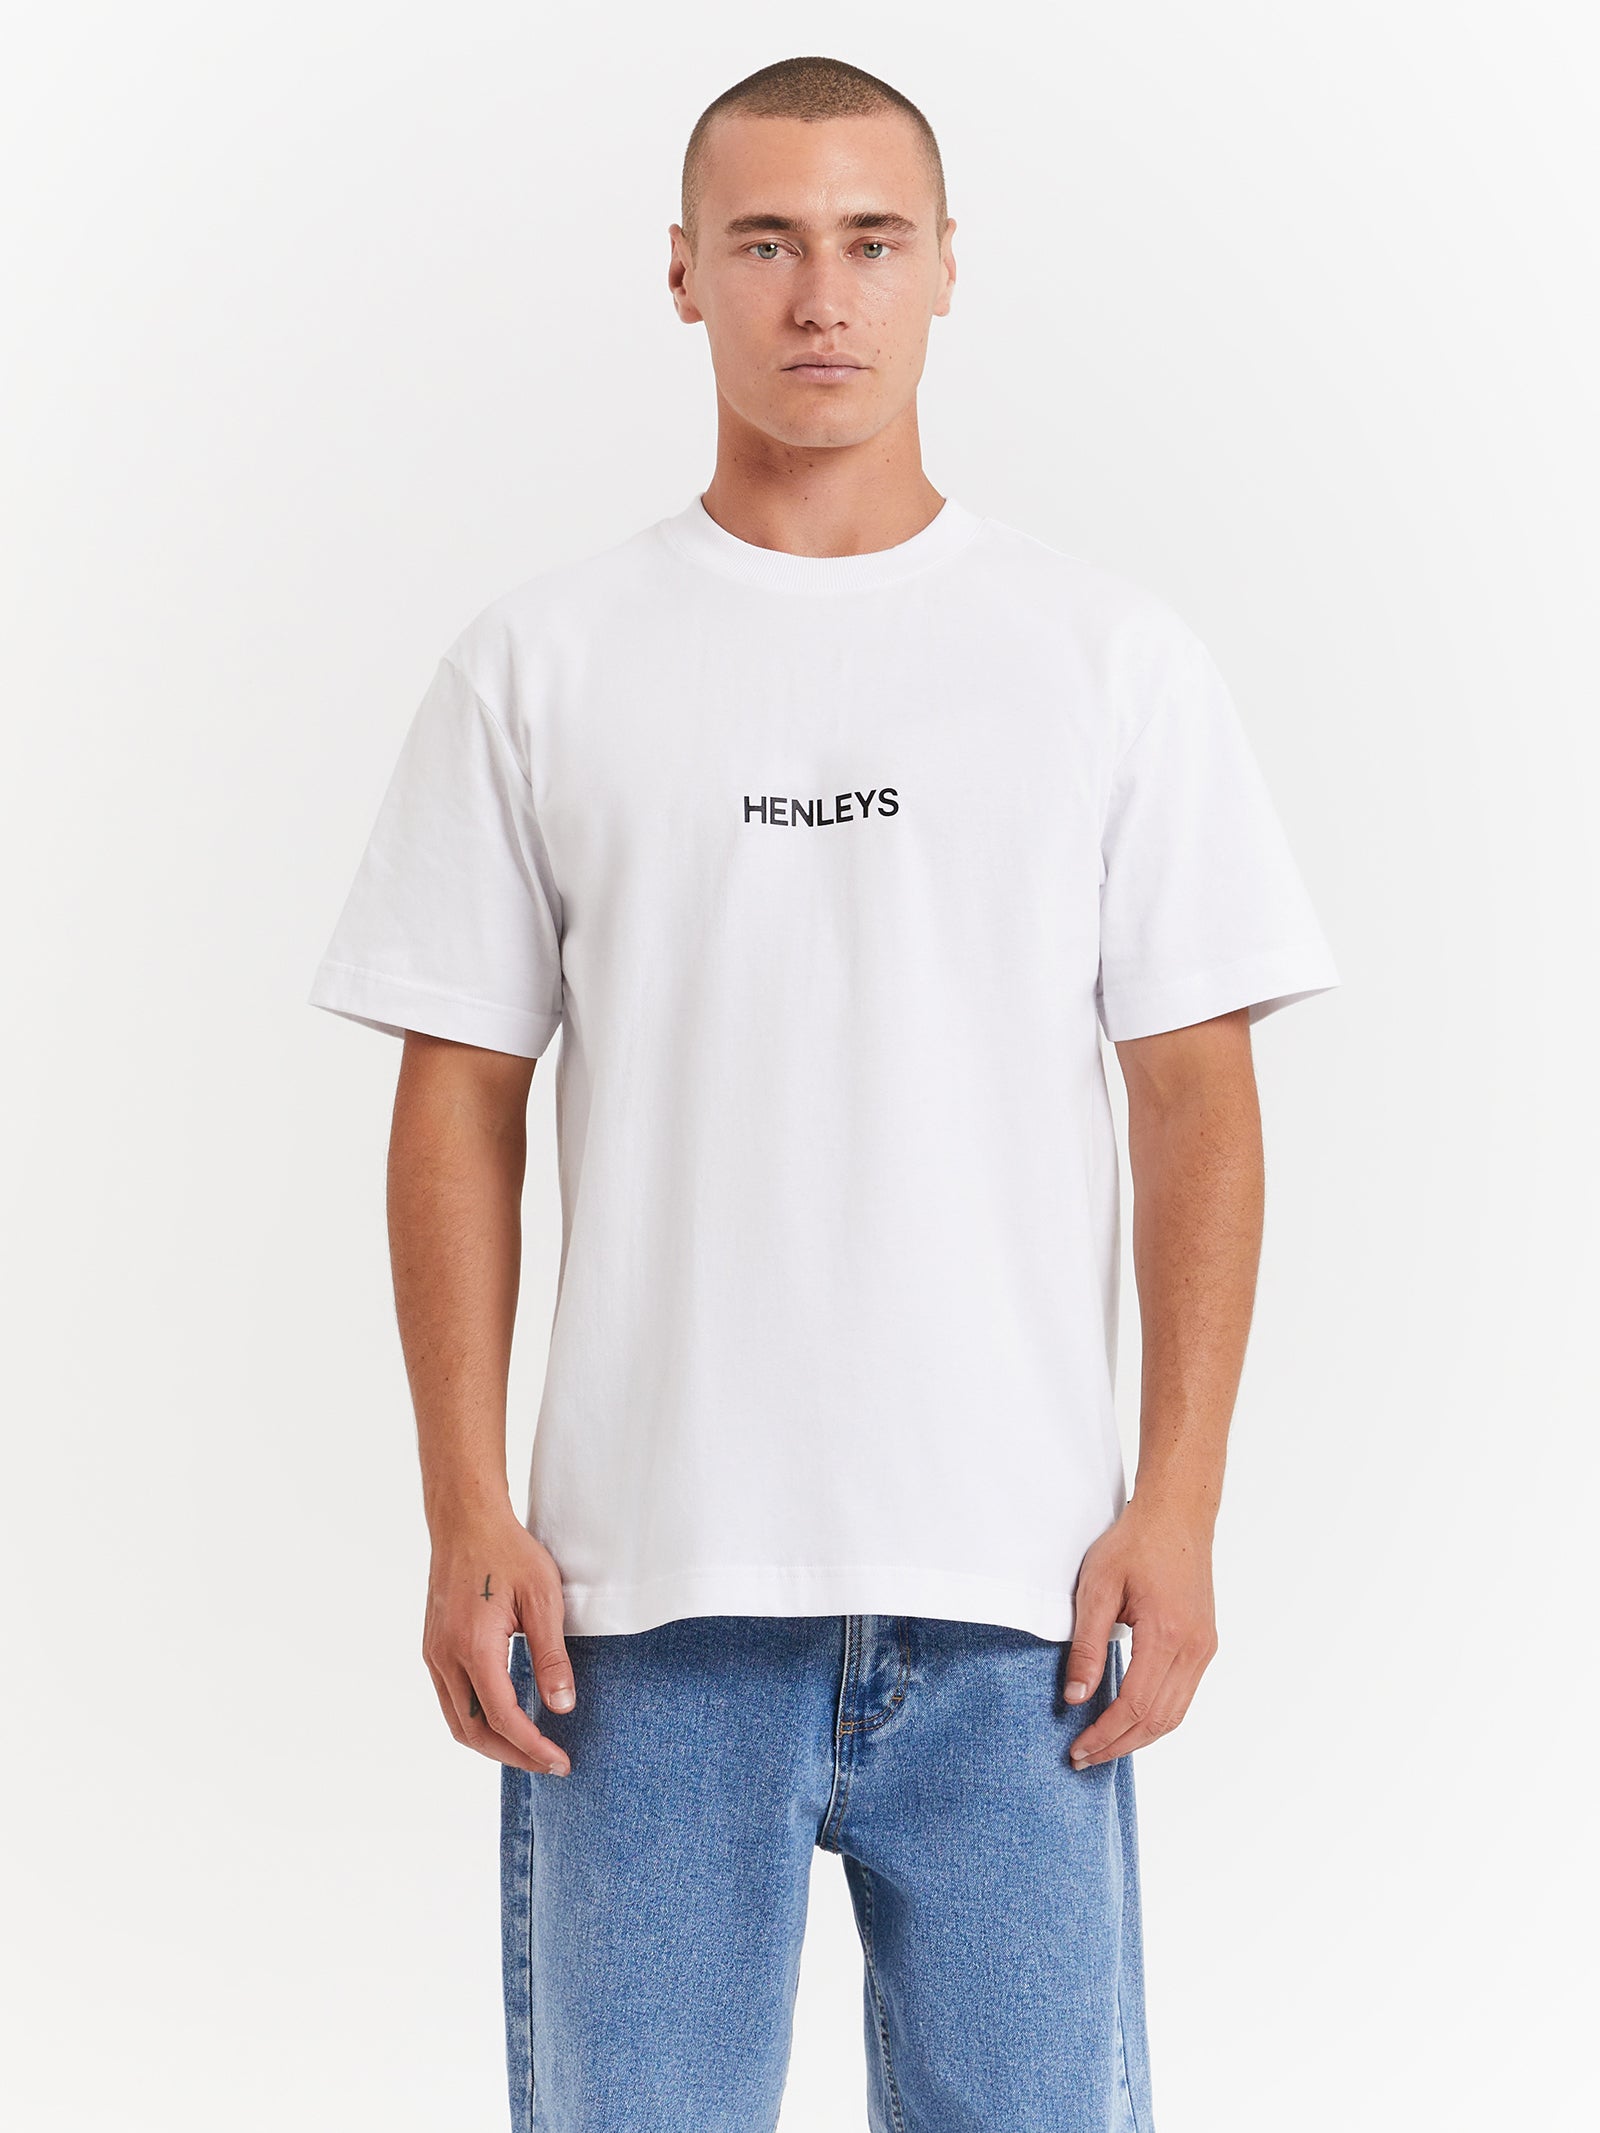 Statement T-Shirt in White